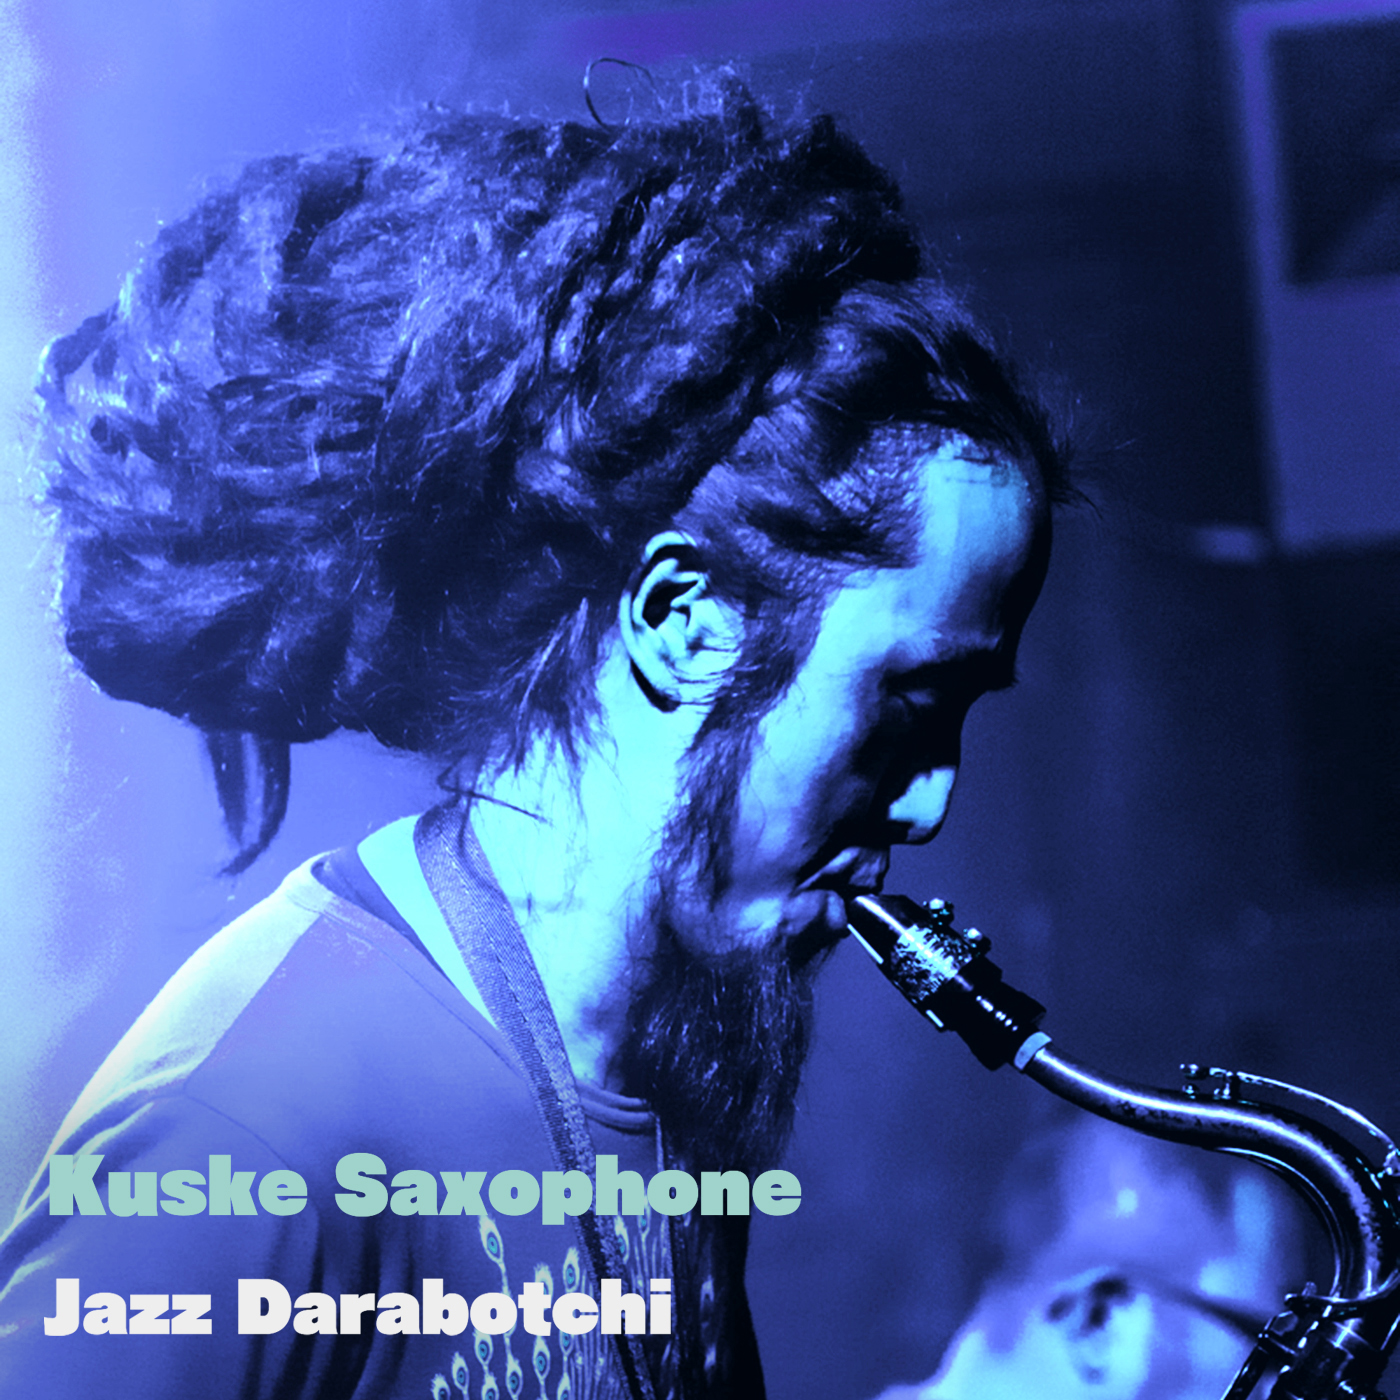 Kuske Saxophone / Jazz Darabotchi